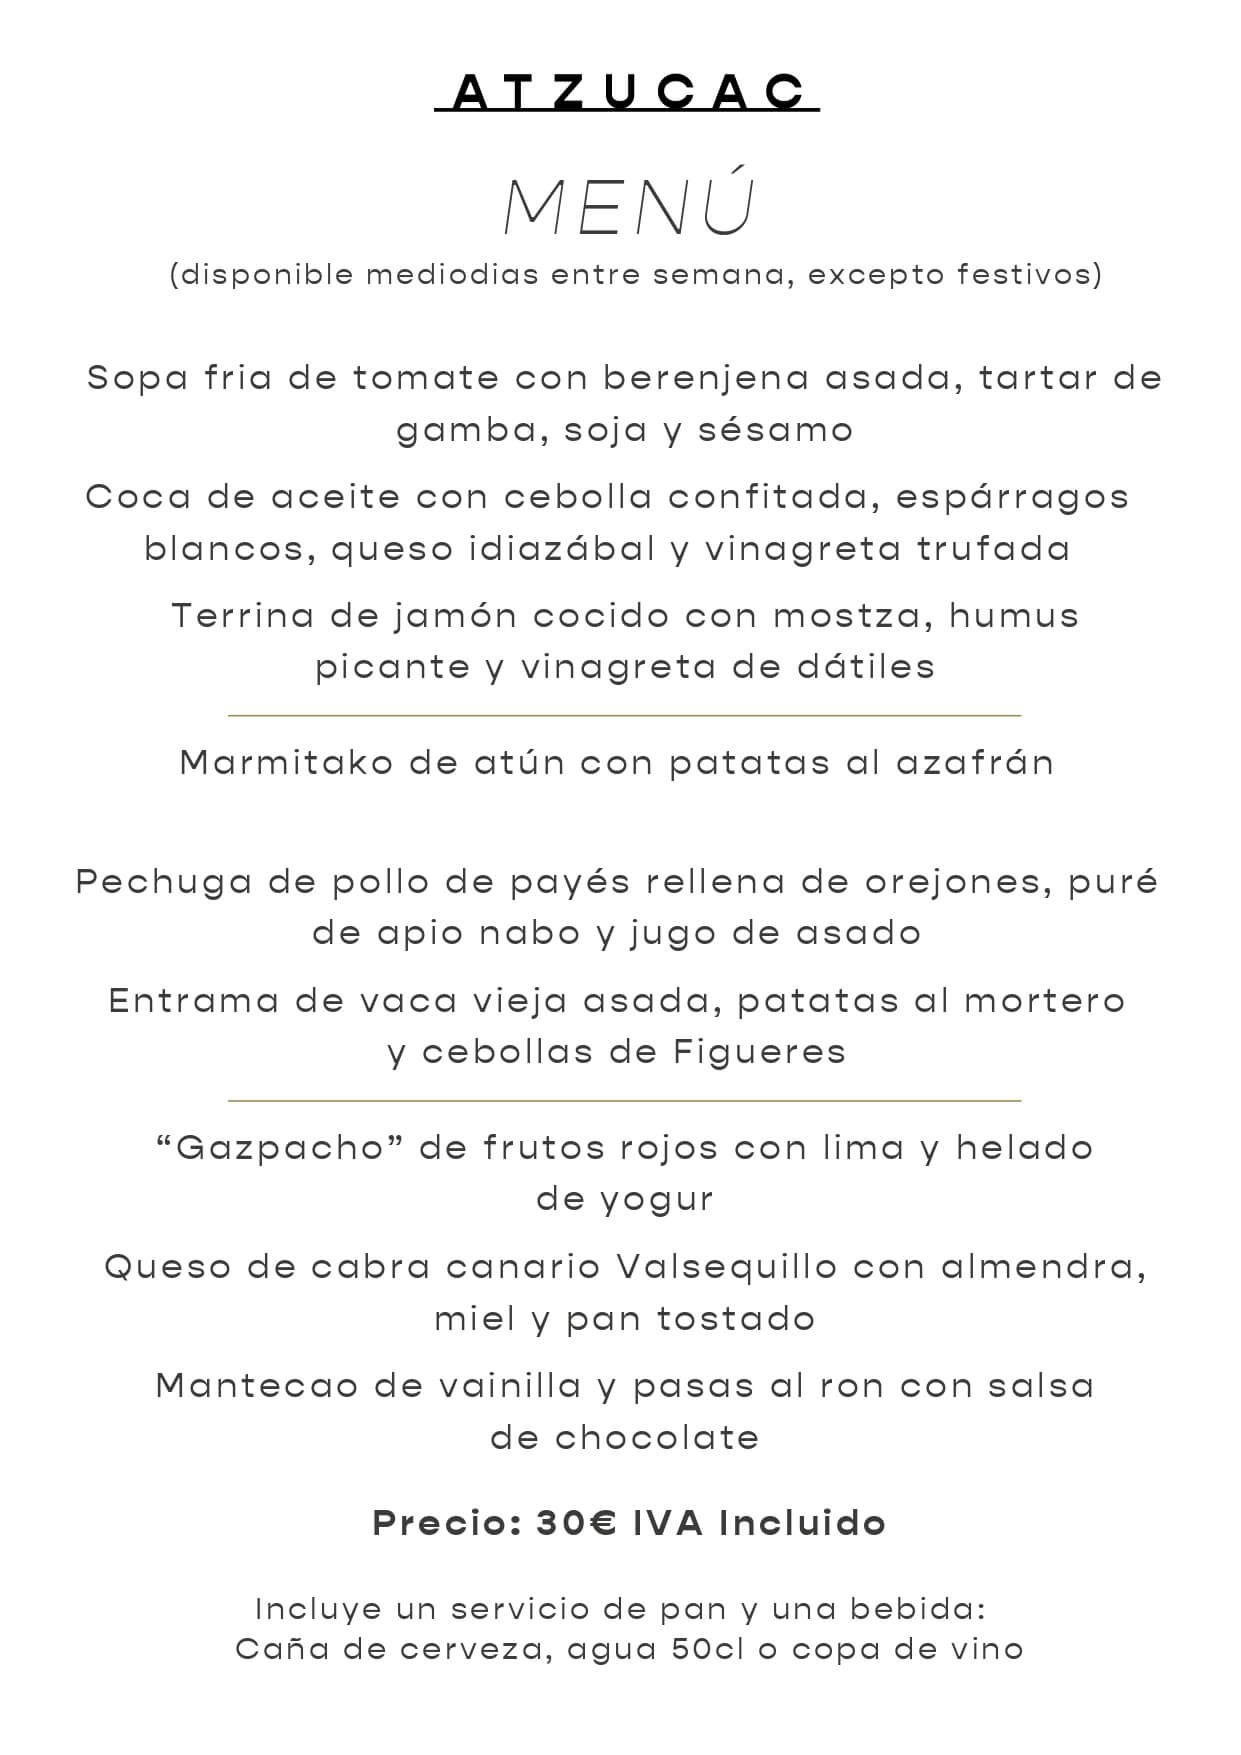 Menú en castellano - Atzucac Restaurant